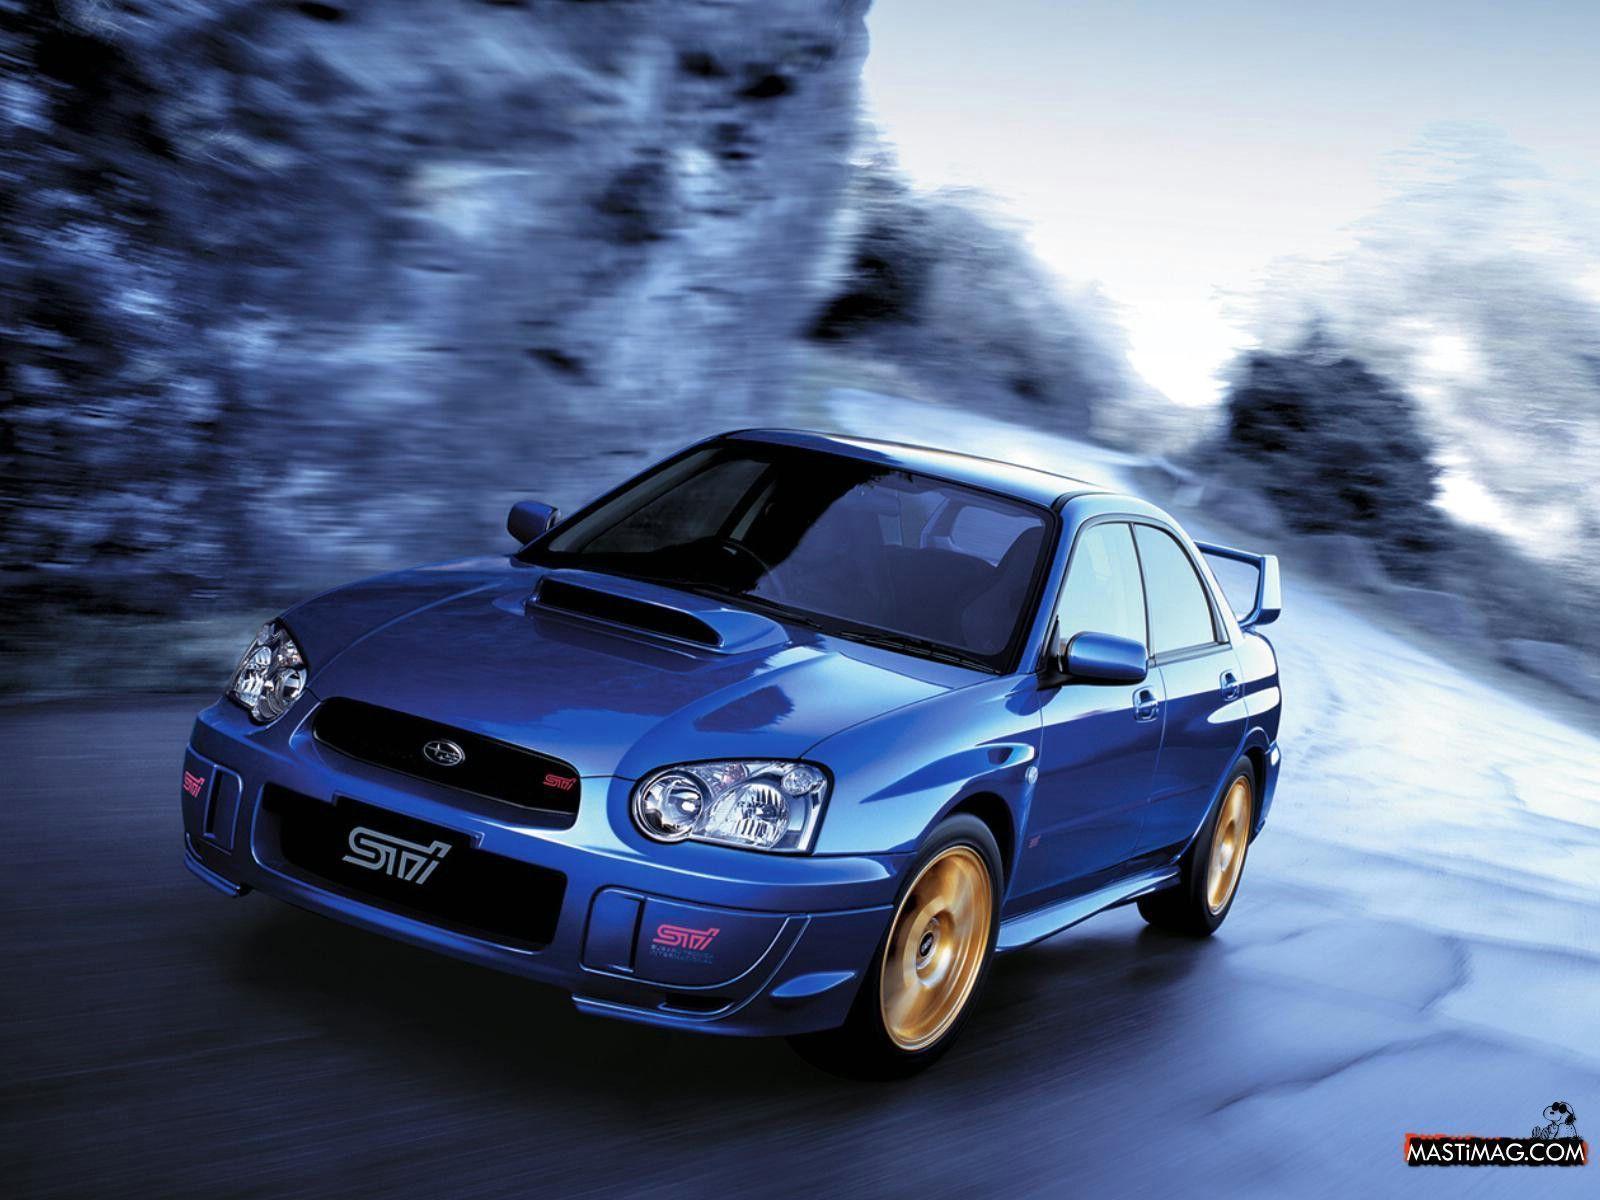 Subaru Wrx Sti Wallpapers Top Free Subaru Wrx Sti Backgrounds Wallpaperaccess